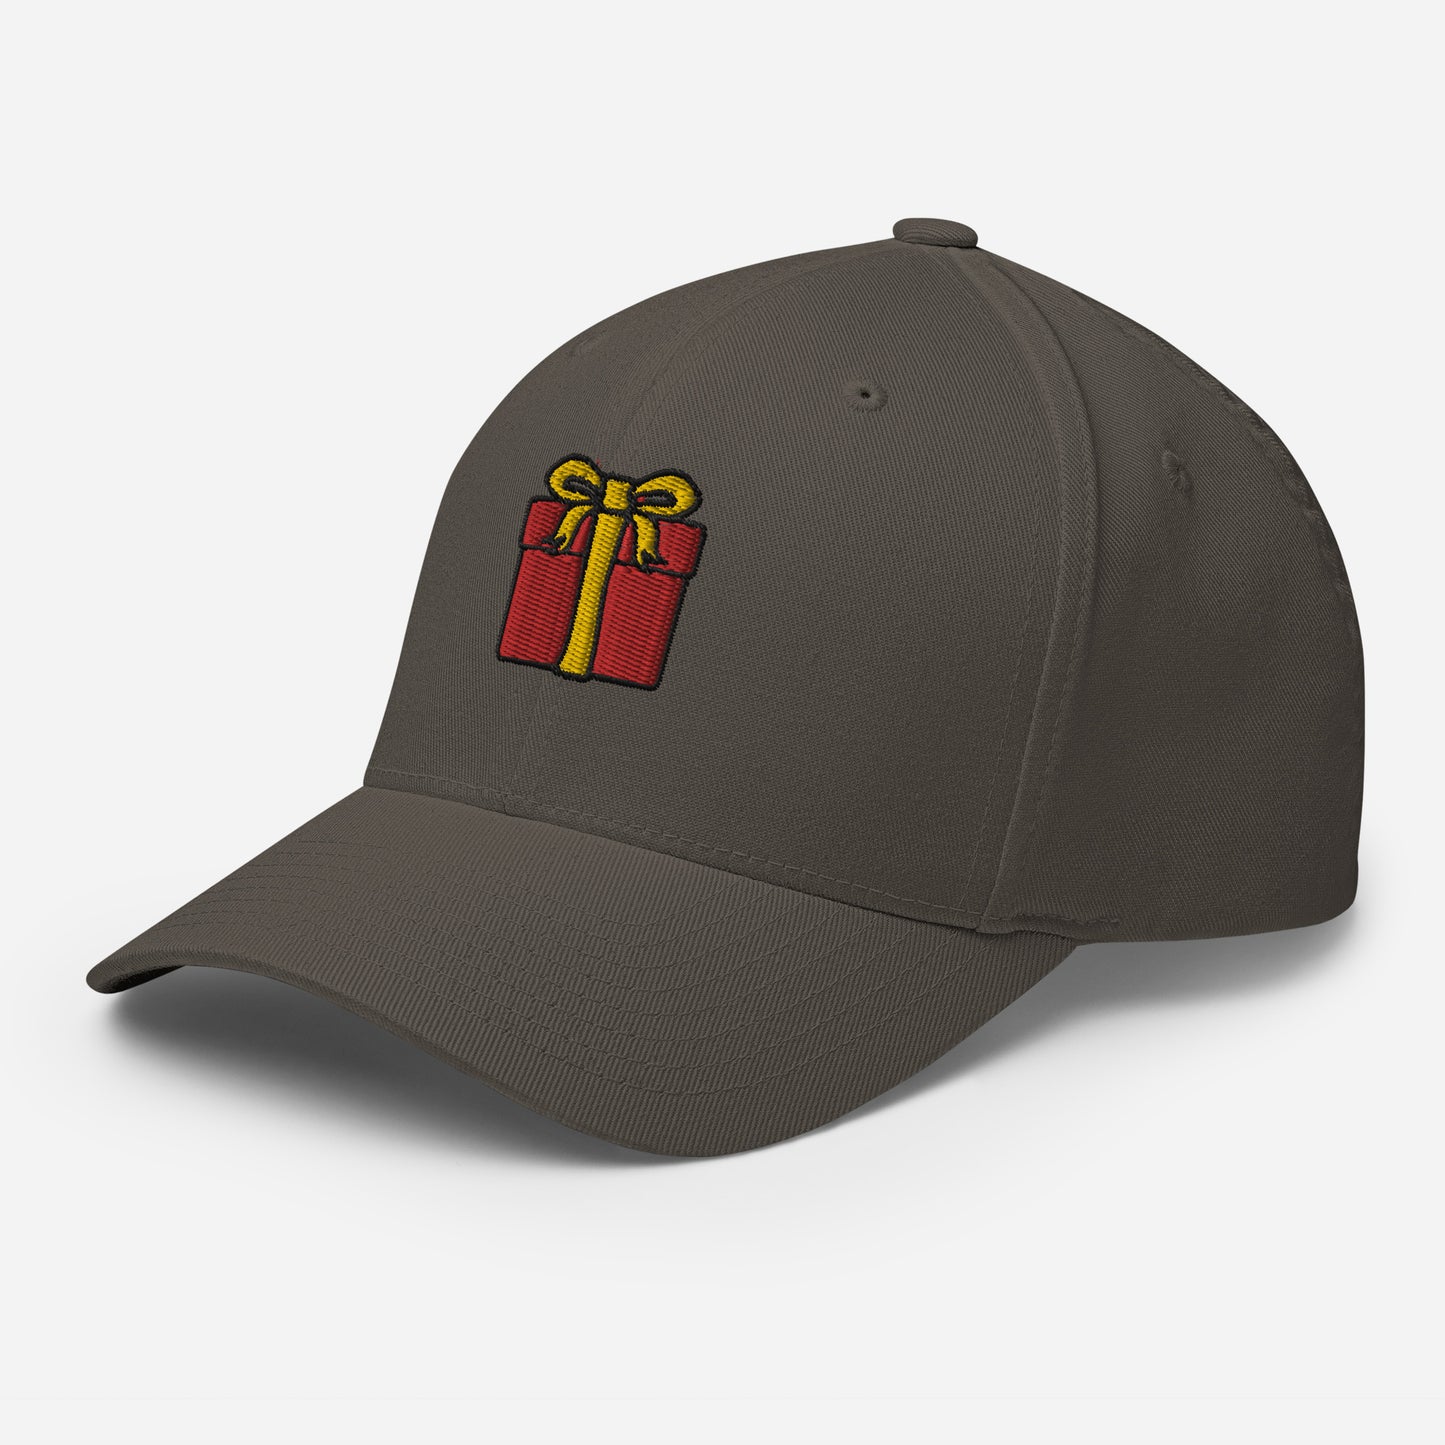 Baseball Cap with Christmas Present Symbol